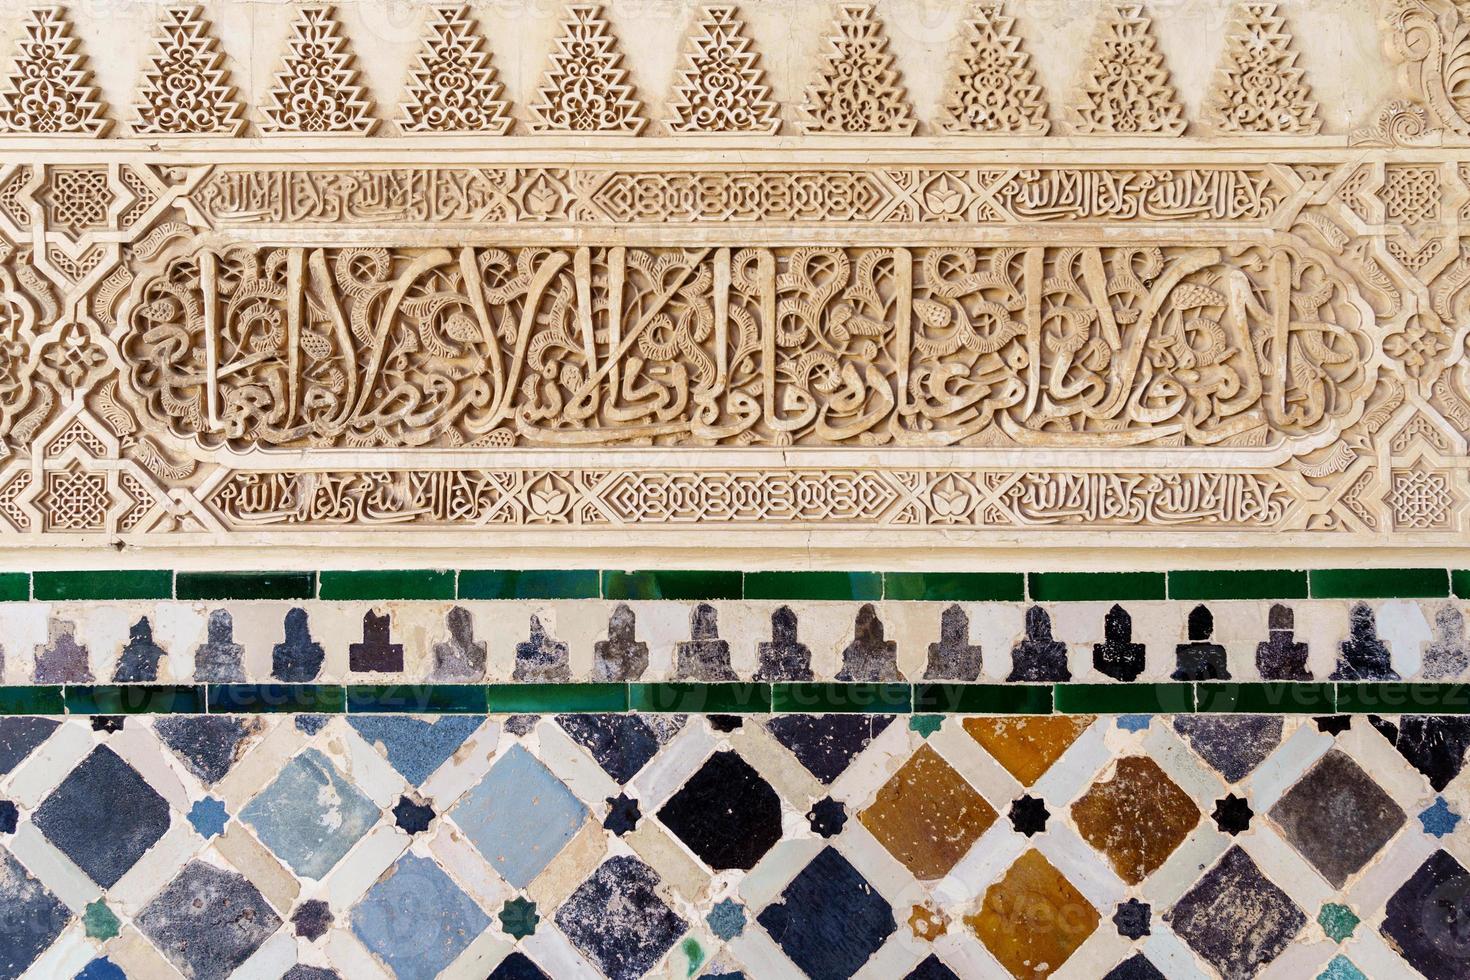 paredes cerâmicas na alhambra de granada. foto